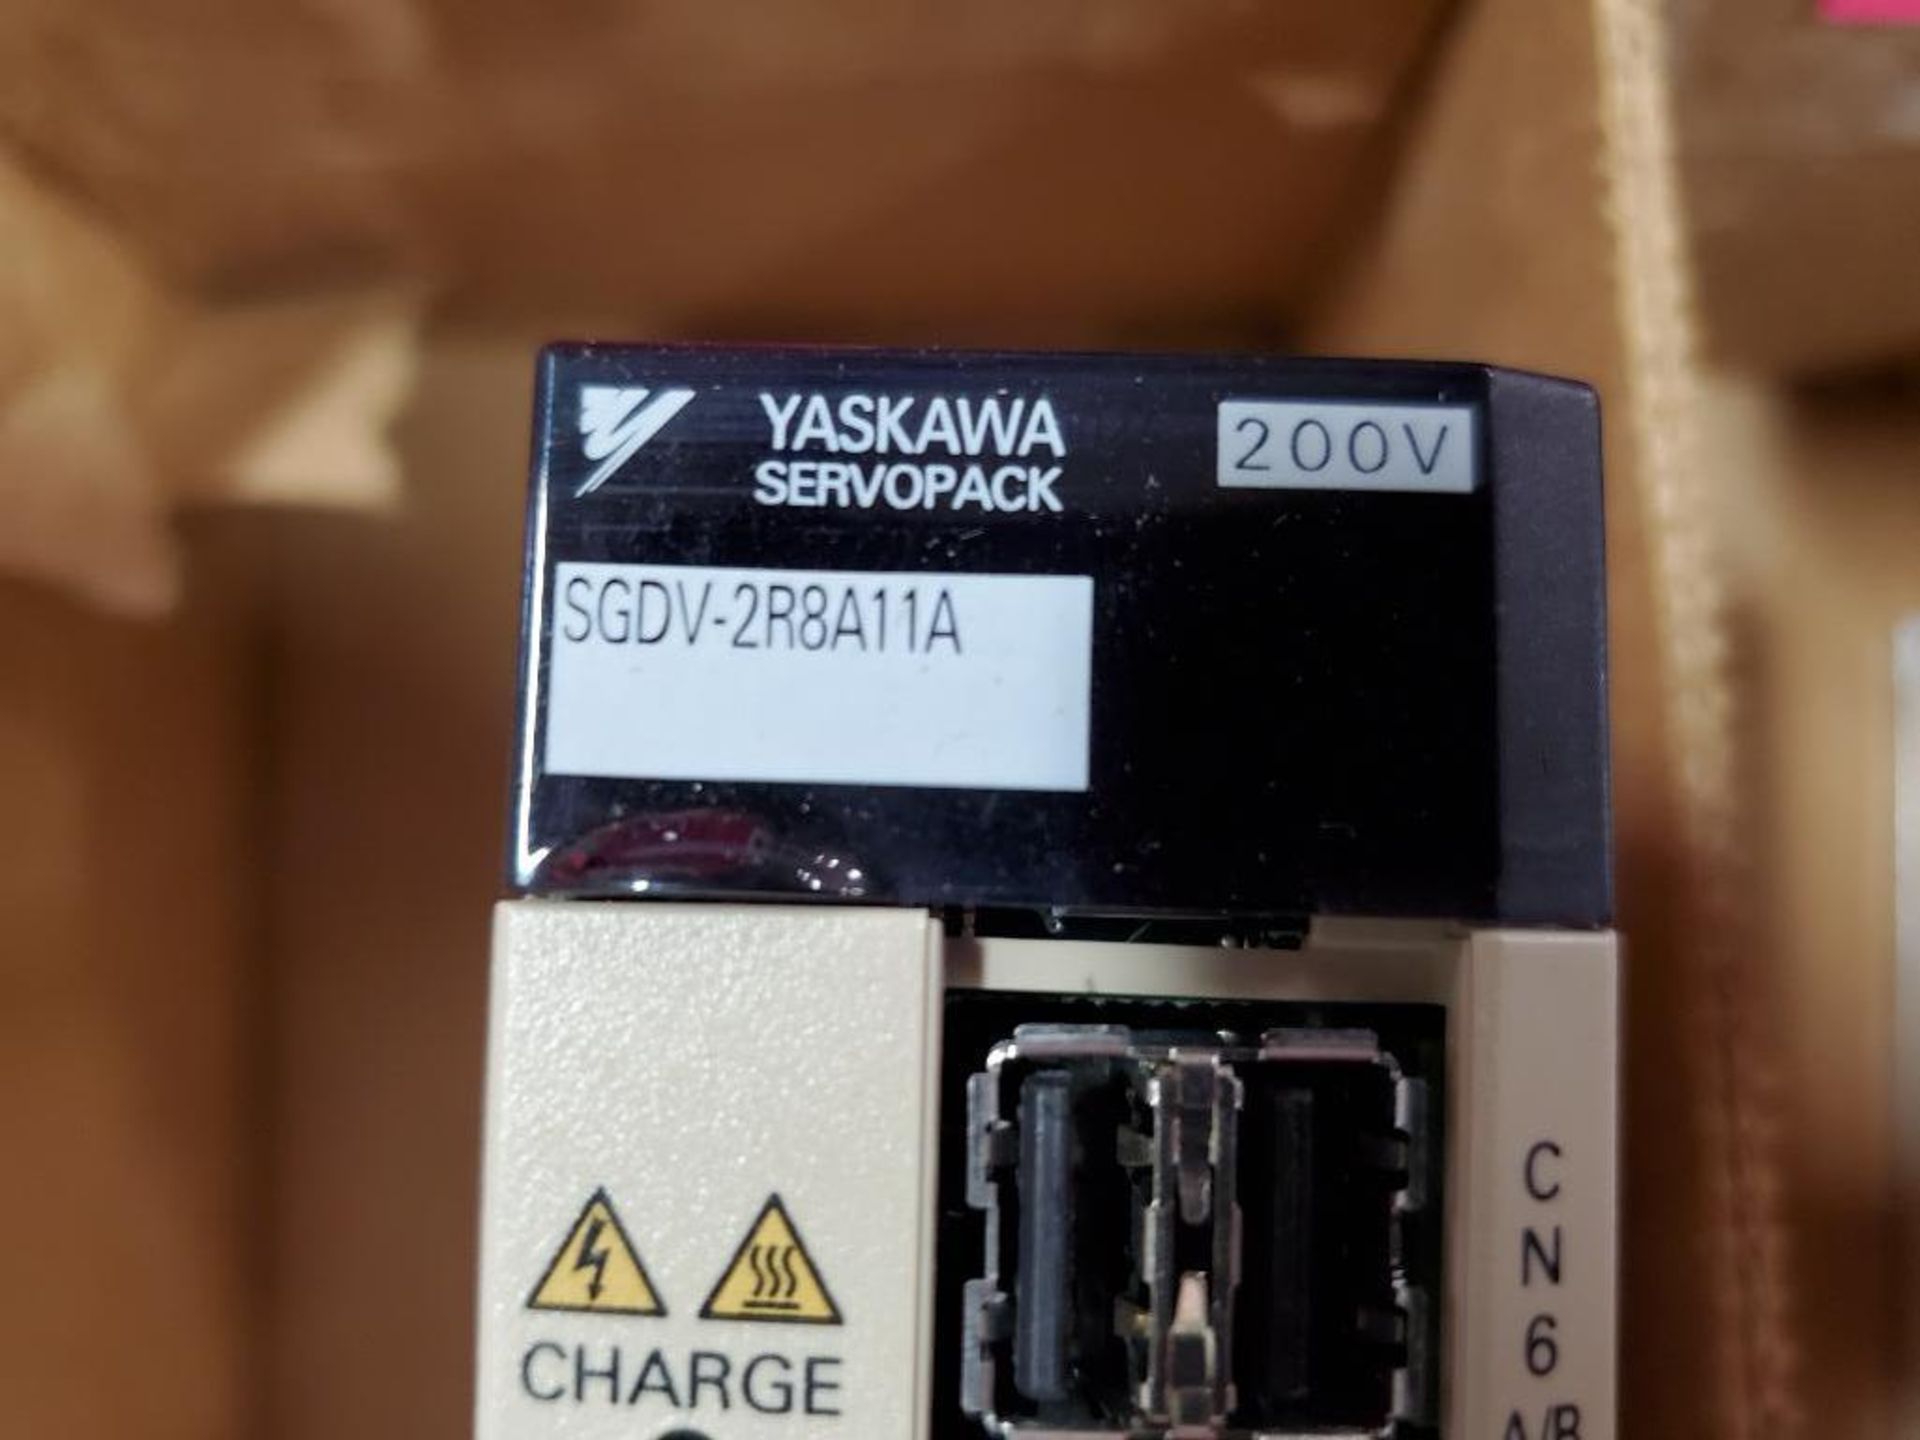 Yaskawa Servopack drive. Part number SGDV-2R8A11A. - Image 3 of 4